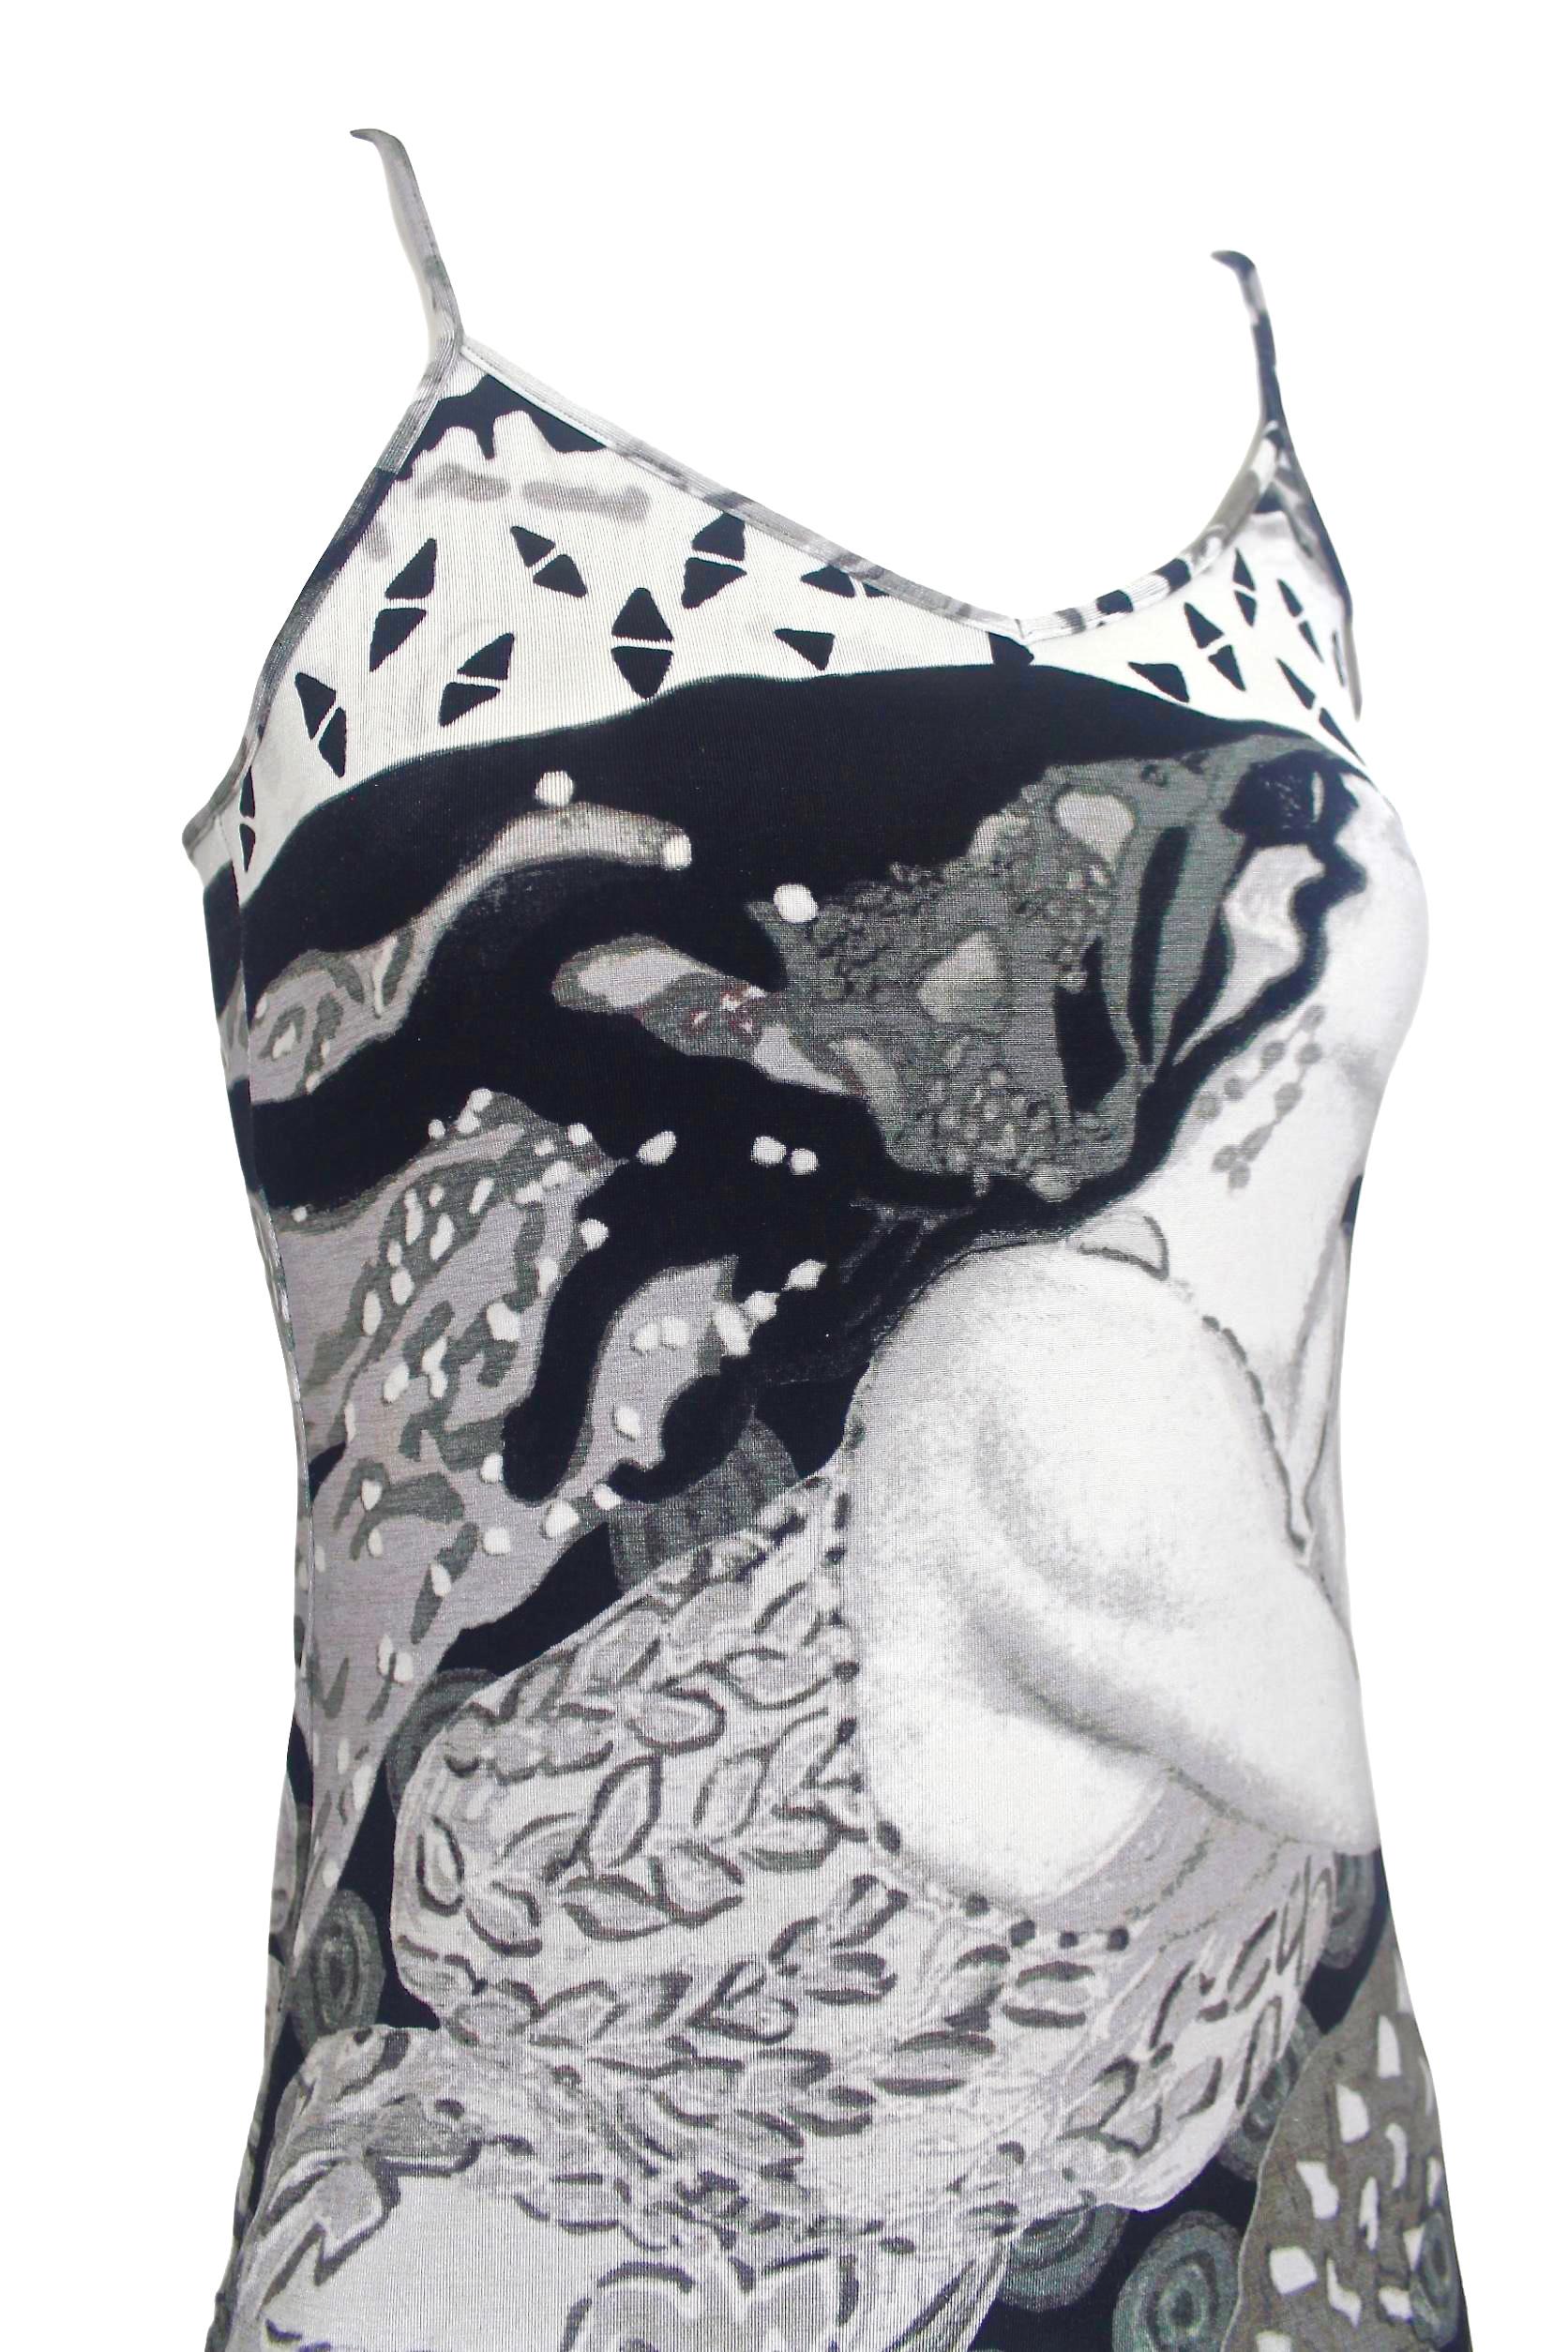 Jean paul Gaultier 'Erte' Print Summer Slip Dress For Sale 7